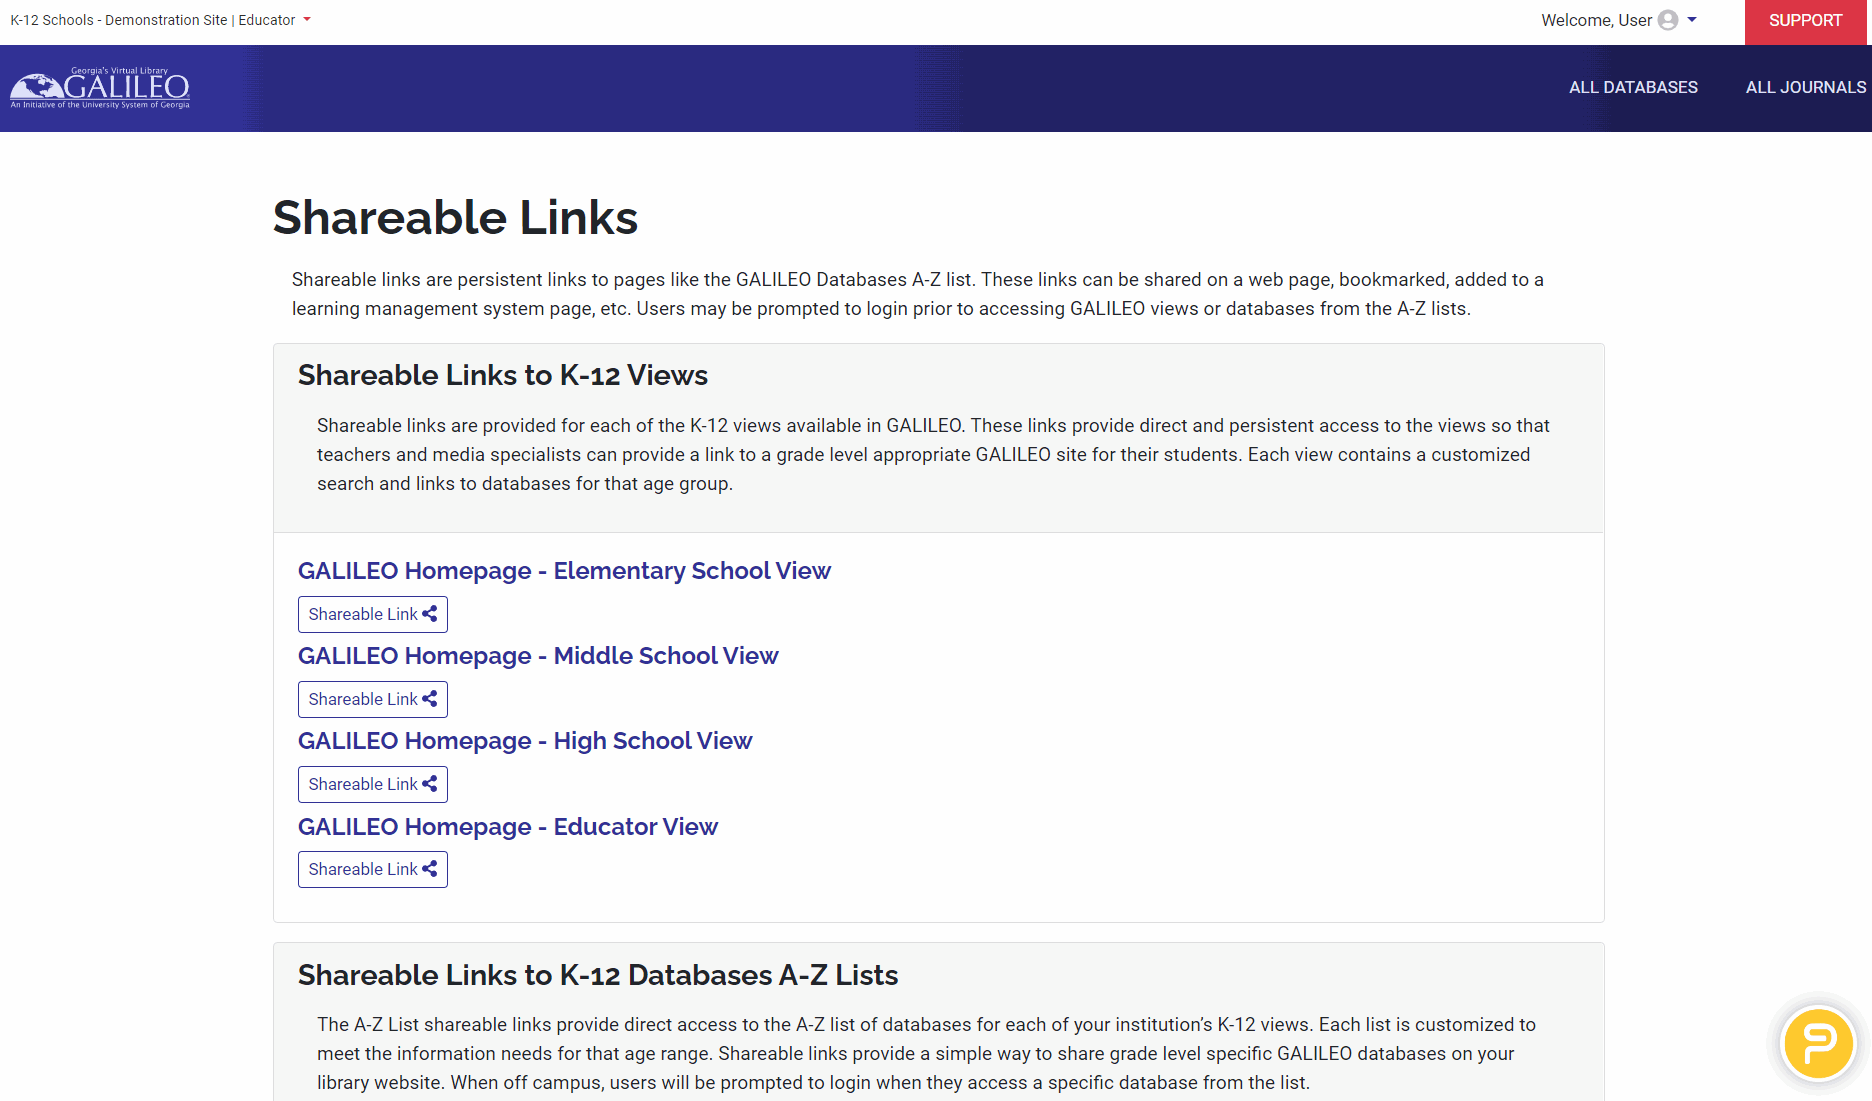 shareable links list